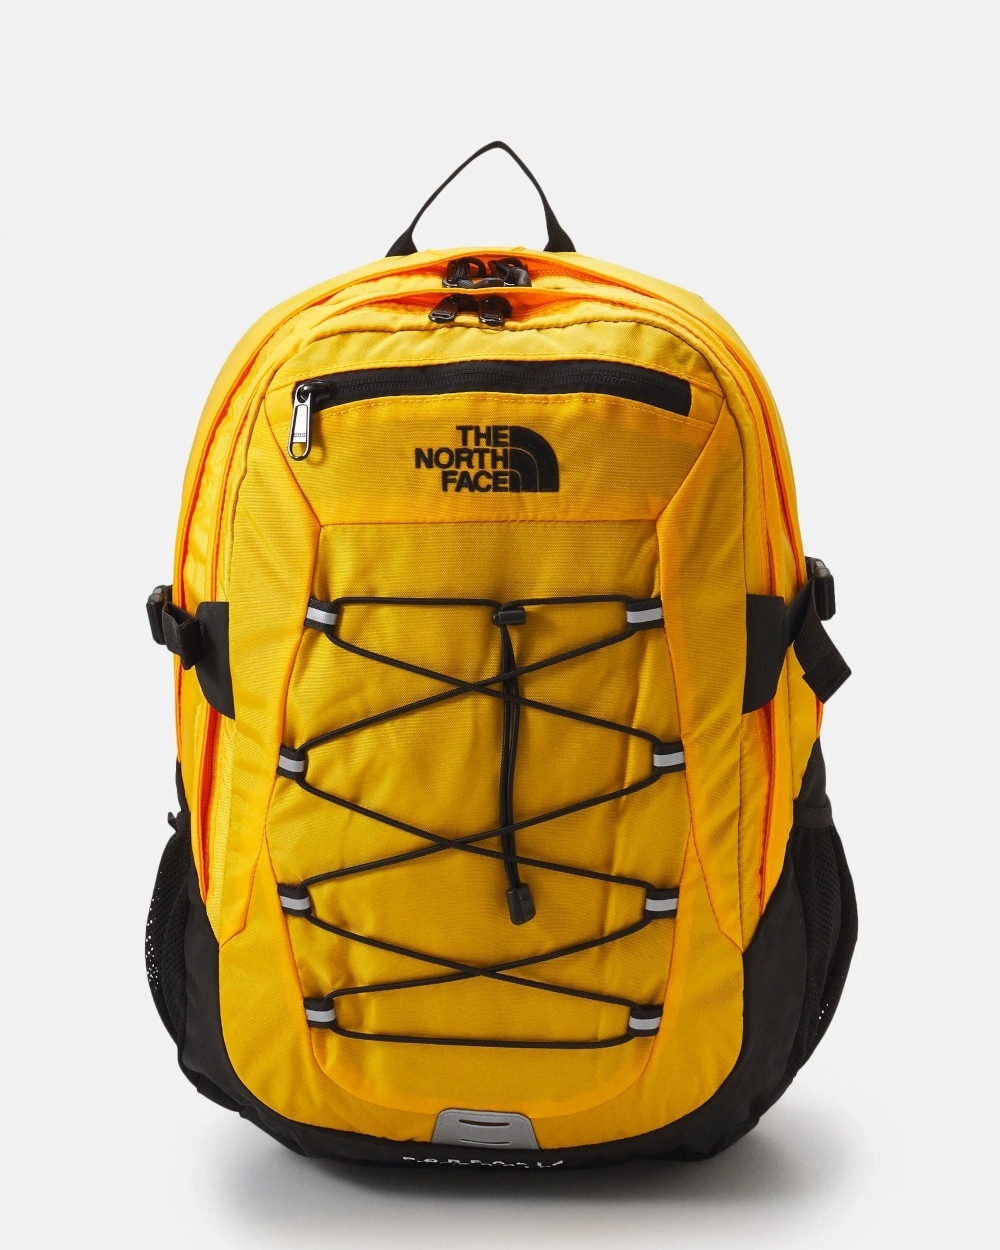  The North Face Zaino Bag Backpack Giallo Unisex Borealis Classic